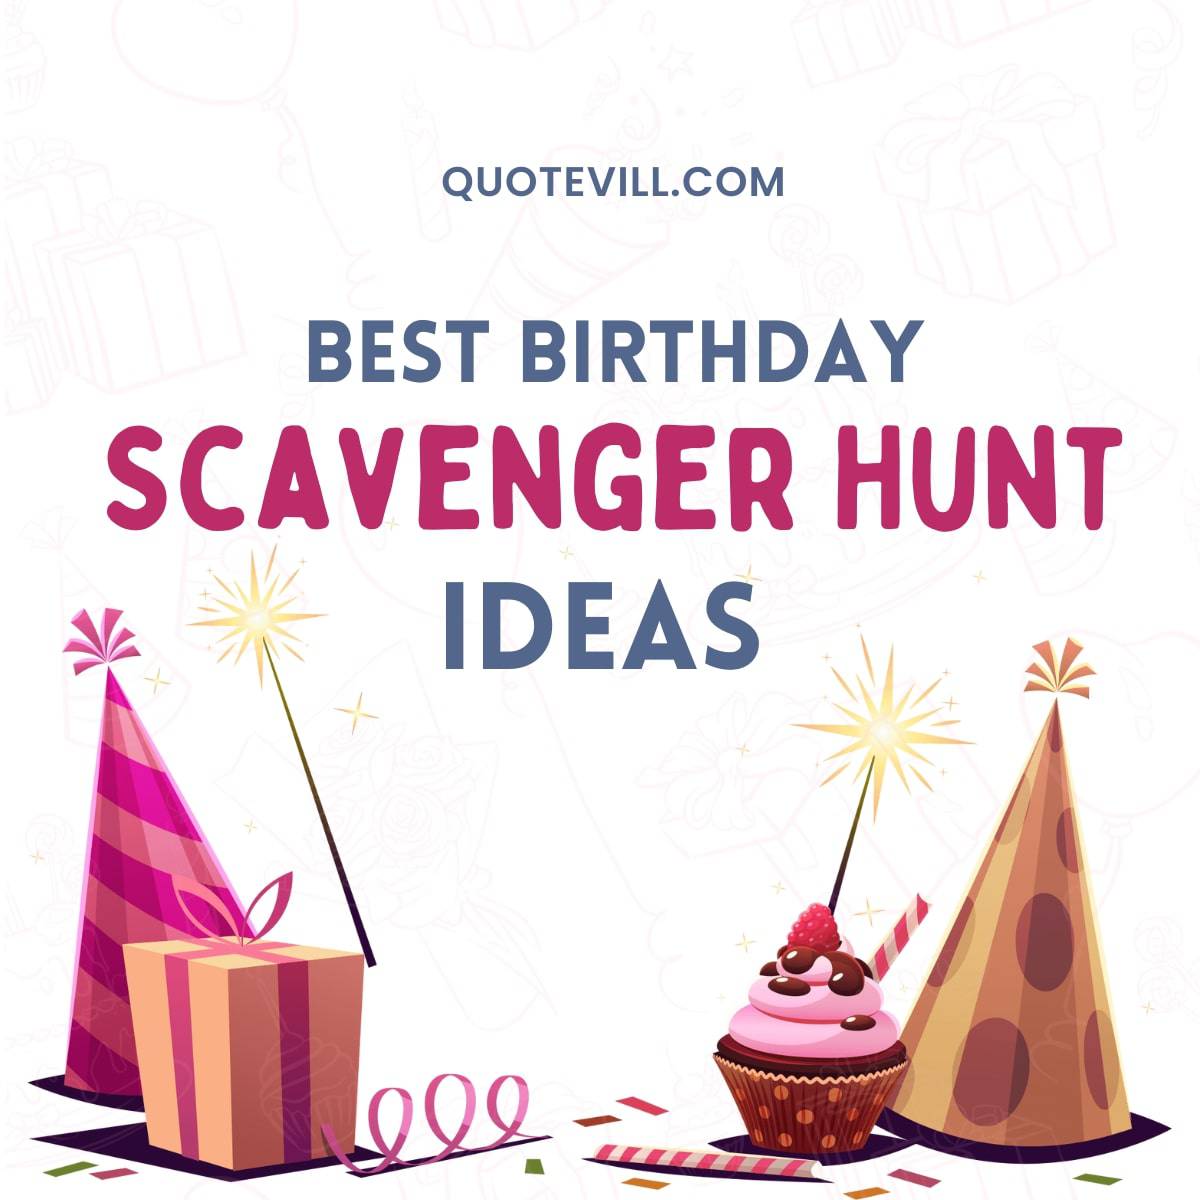 Best-Birthday-Scavenger-Hunt-Ideas